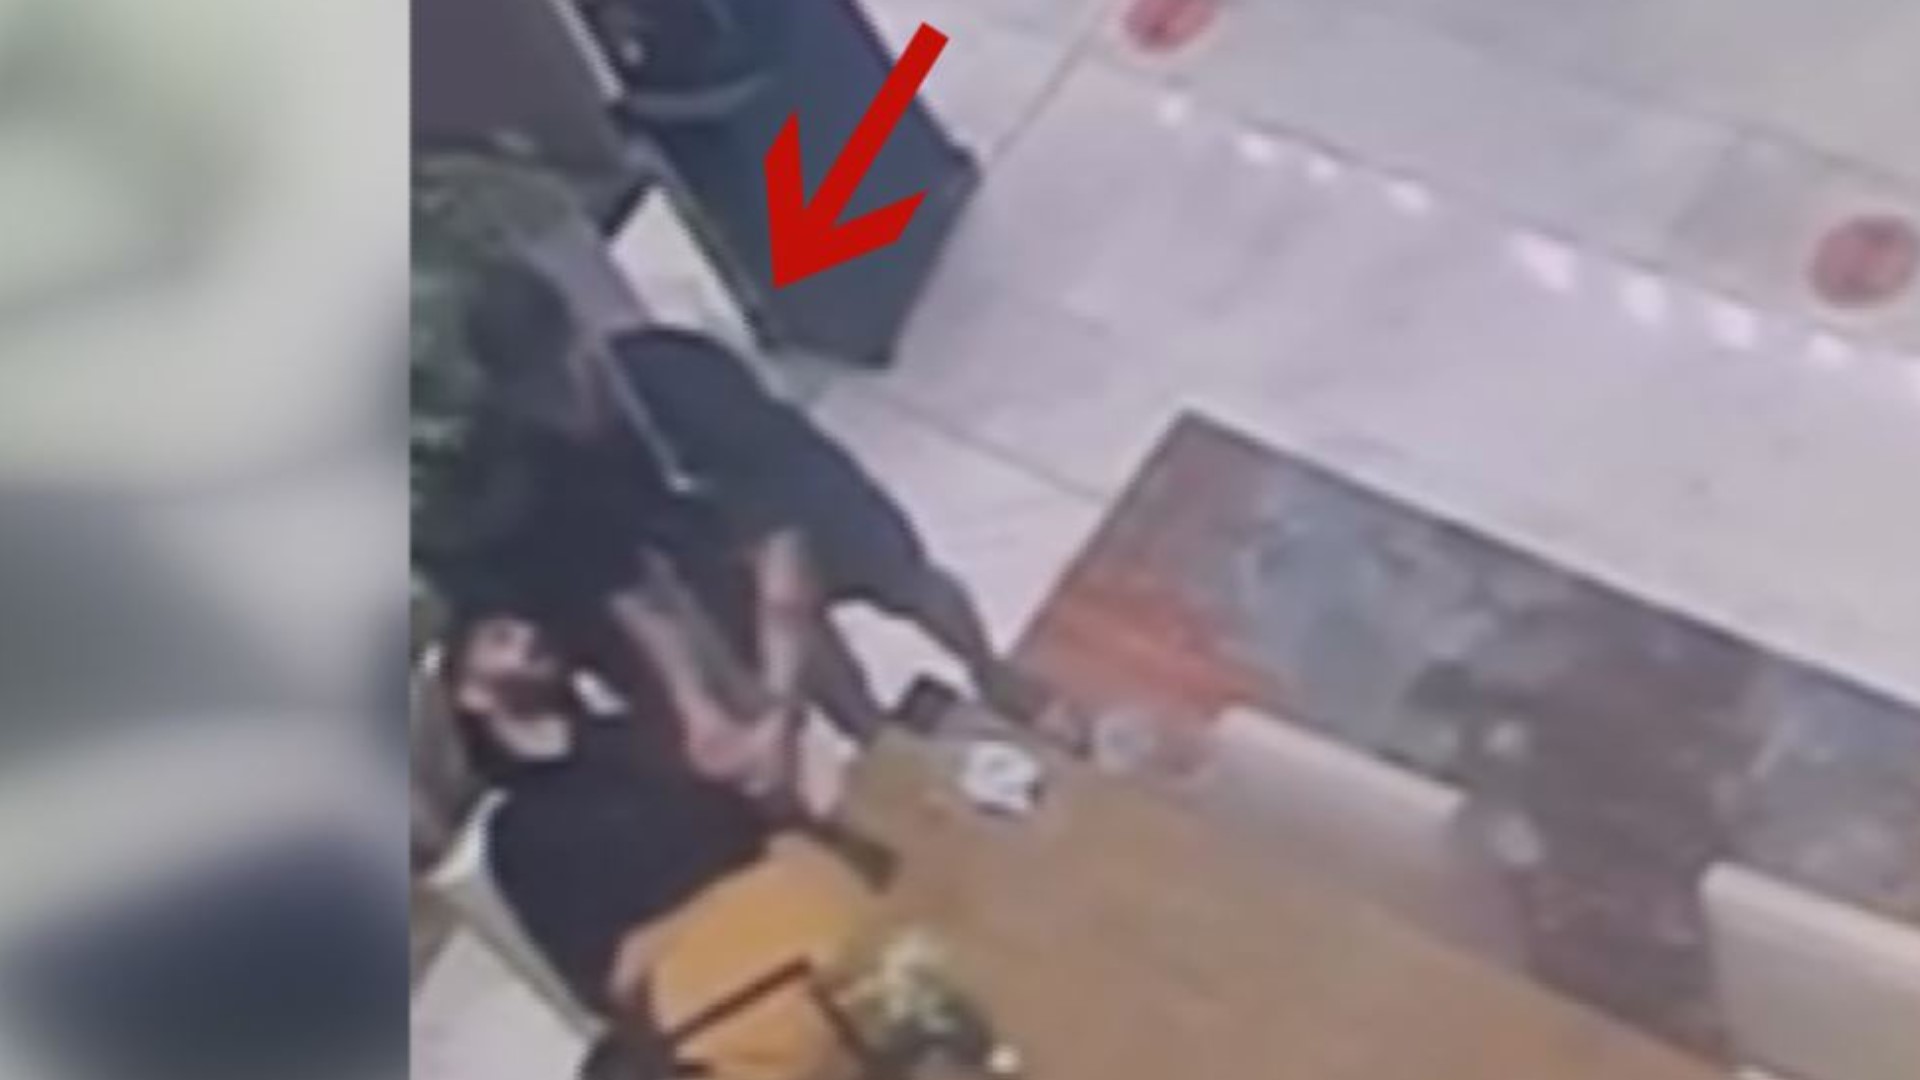 rysten sneen Røg Rolex stolen off sleeping man's wrist in DC hotel | wusa9.com